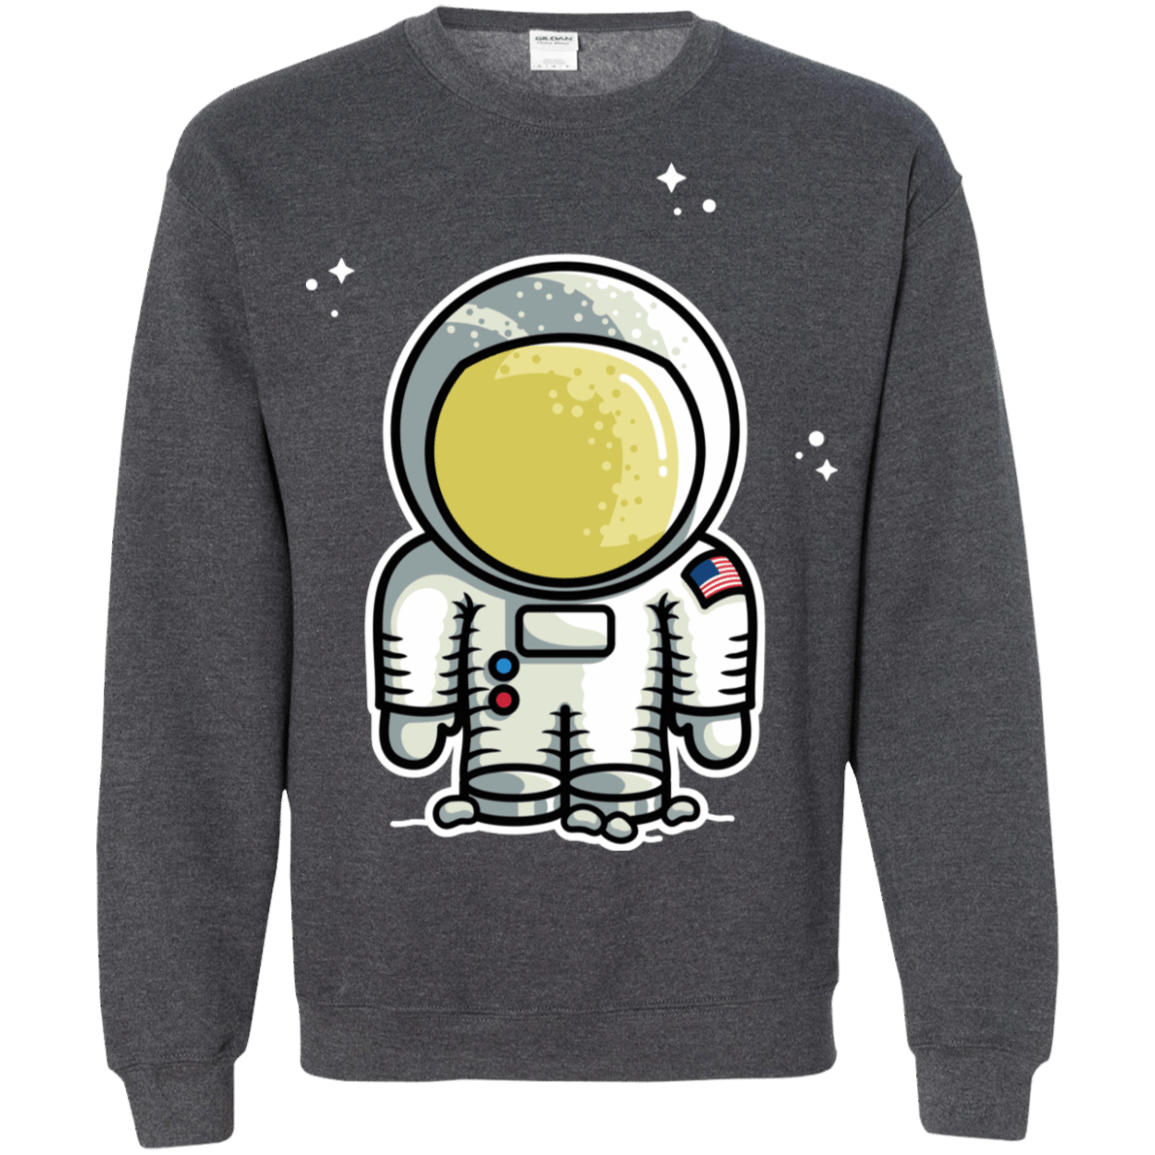 Sweatshirts Dark Heather / S Cute Astronaut Crewneck Sweatshirt